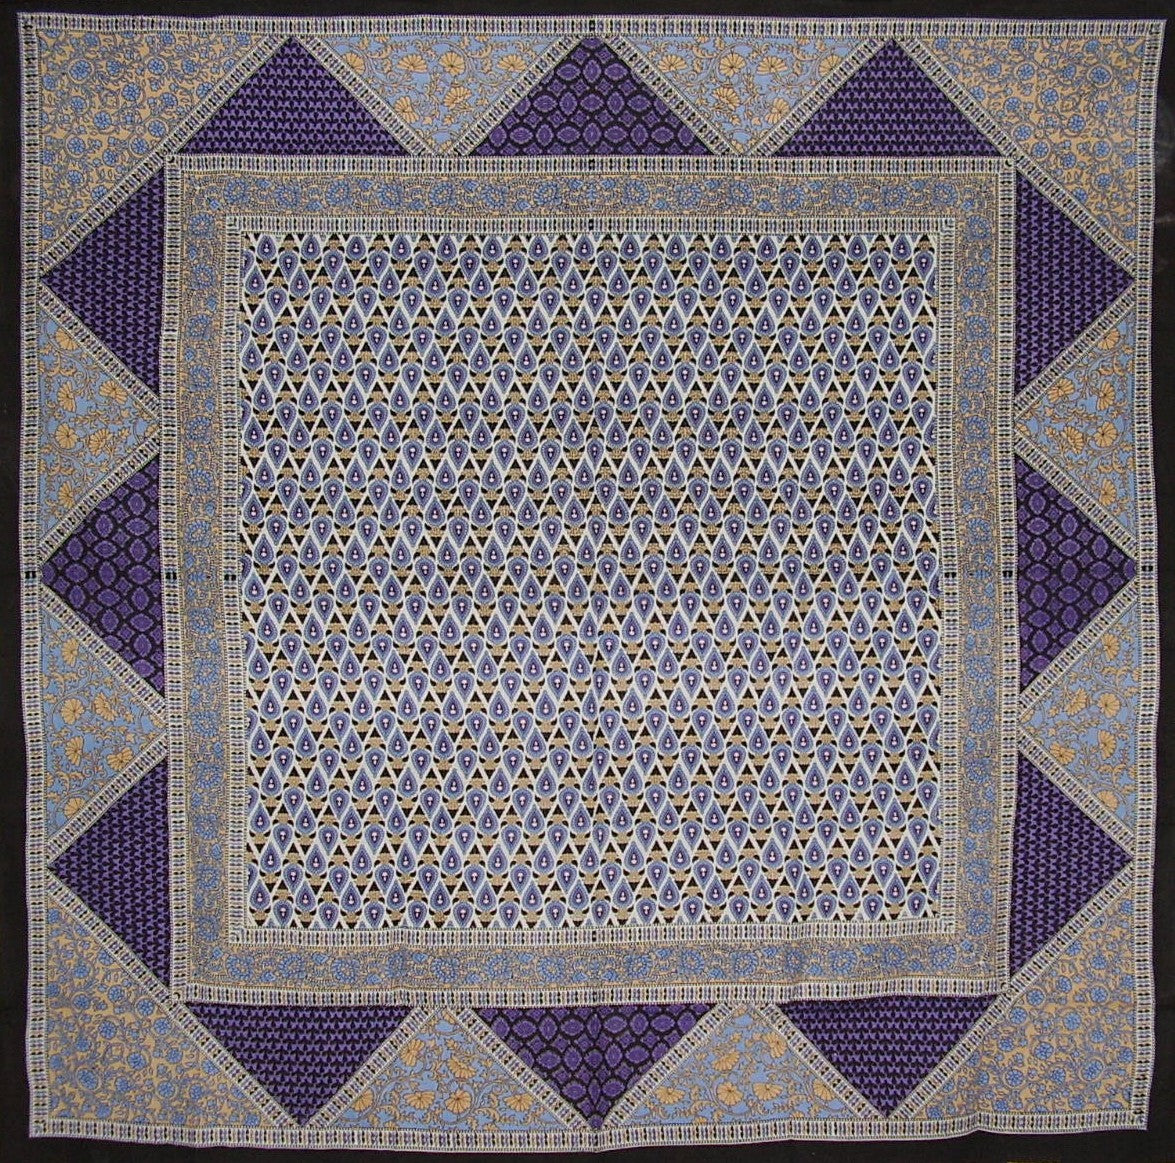 Mantel de algodón cuadrado floral geométrico 70" x 70" Púrpura